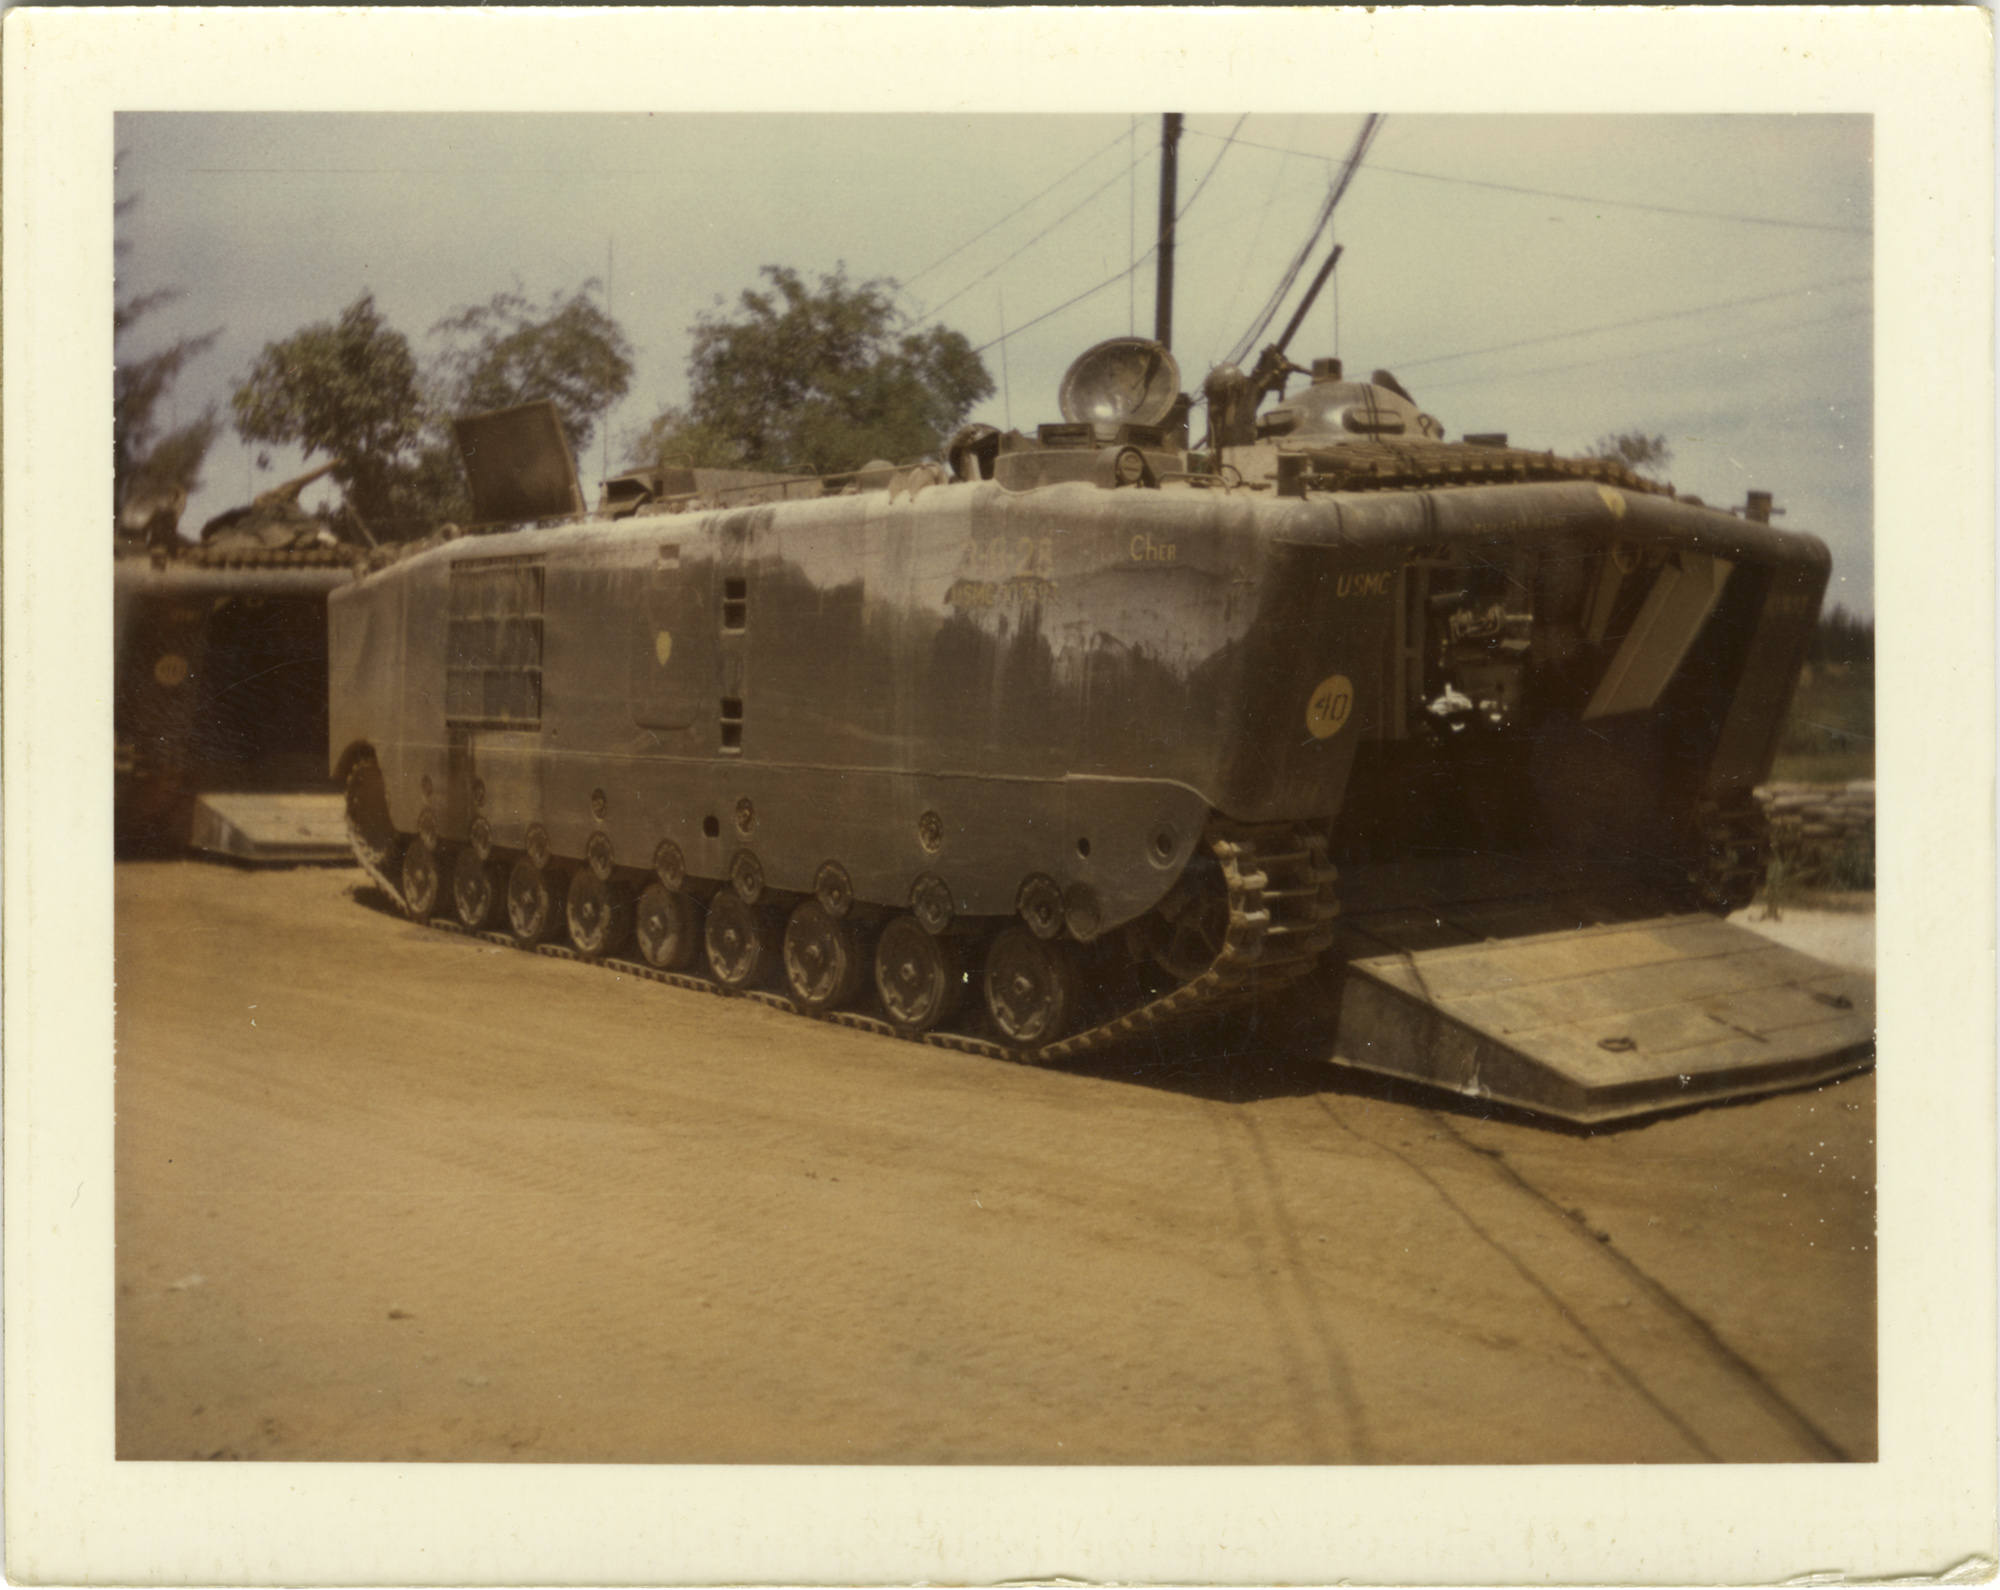 A military tank